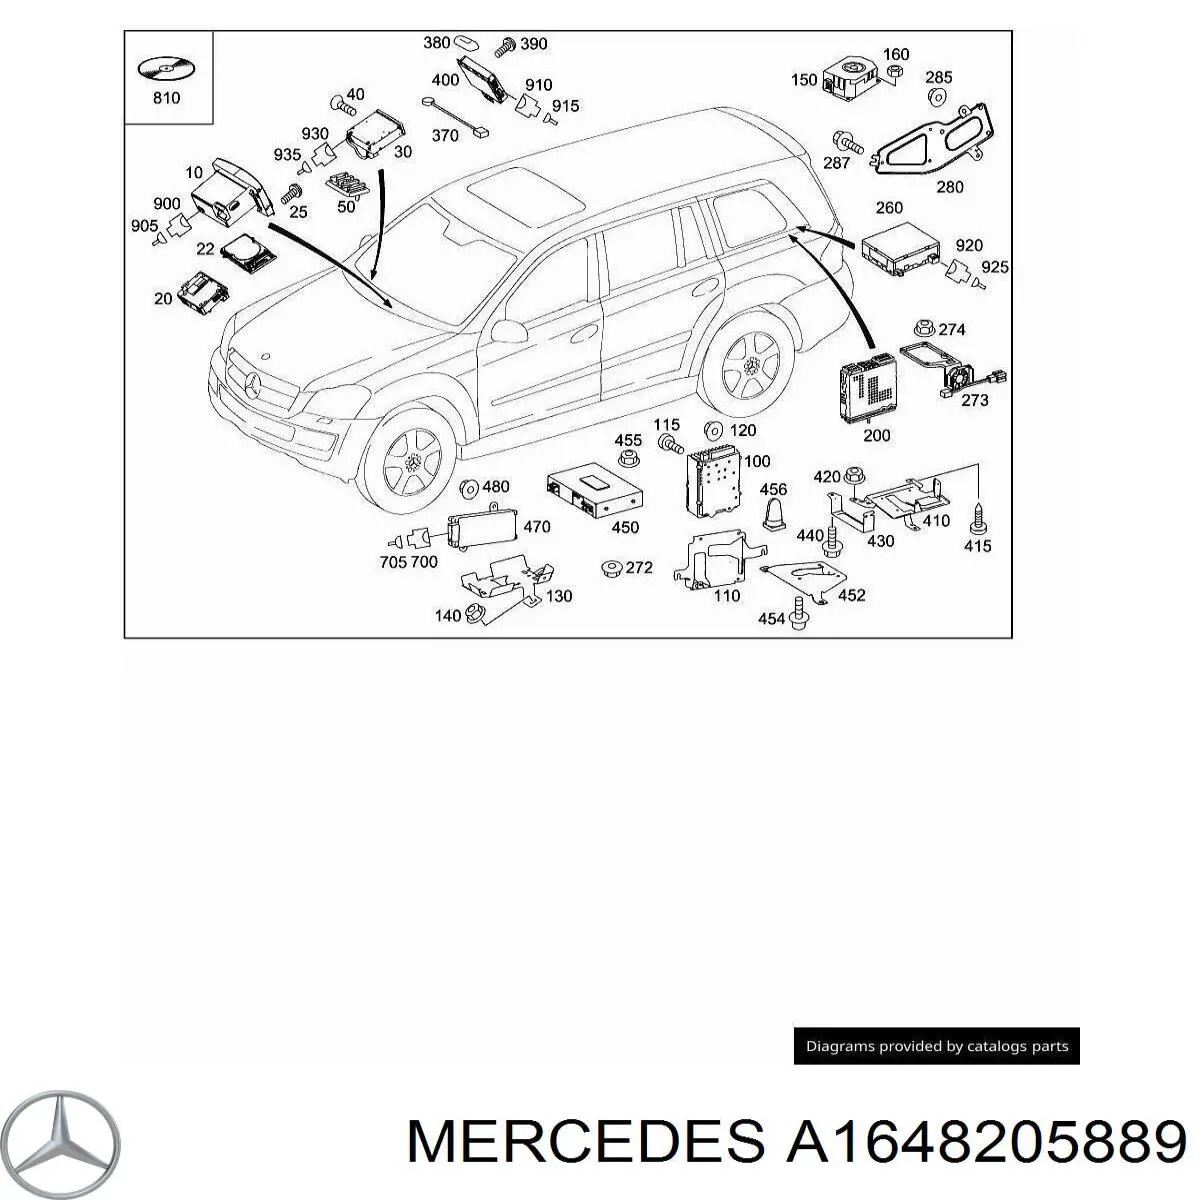 A1648205889 Mercedes